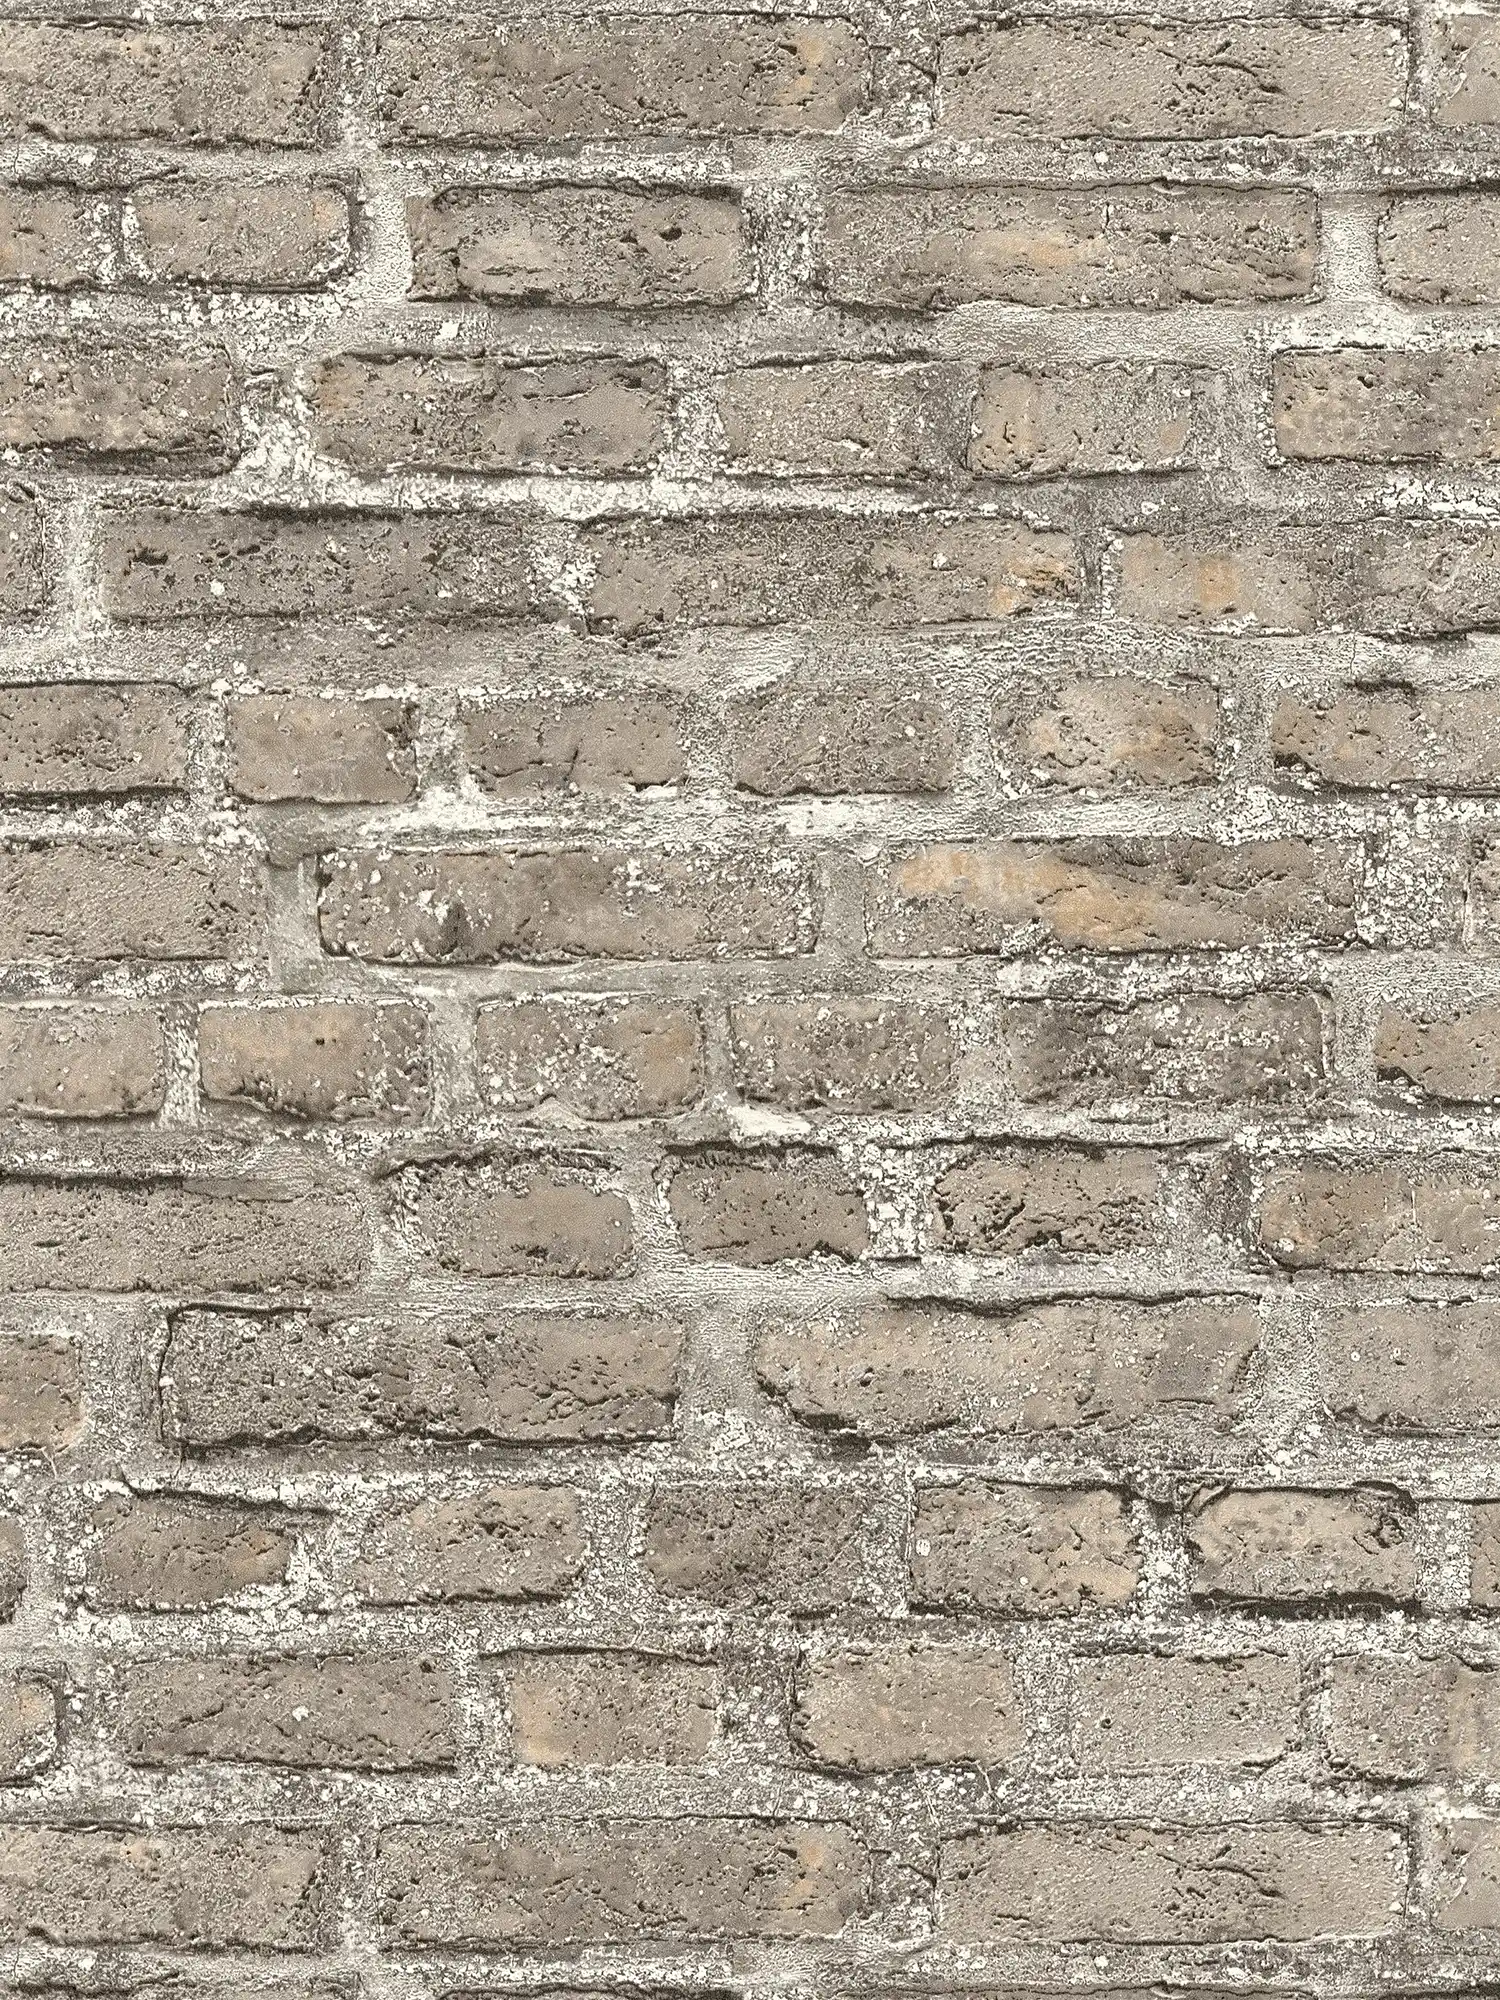         Tapete mit rustikalem Mauer-Motiv im Industrial Style – Grau, Braun
    